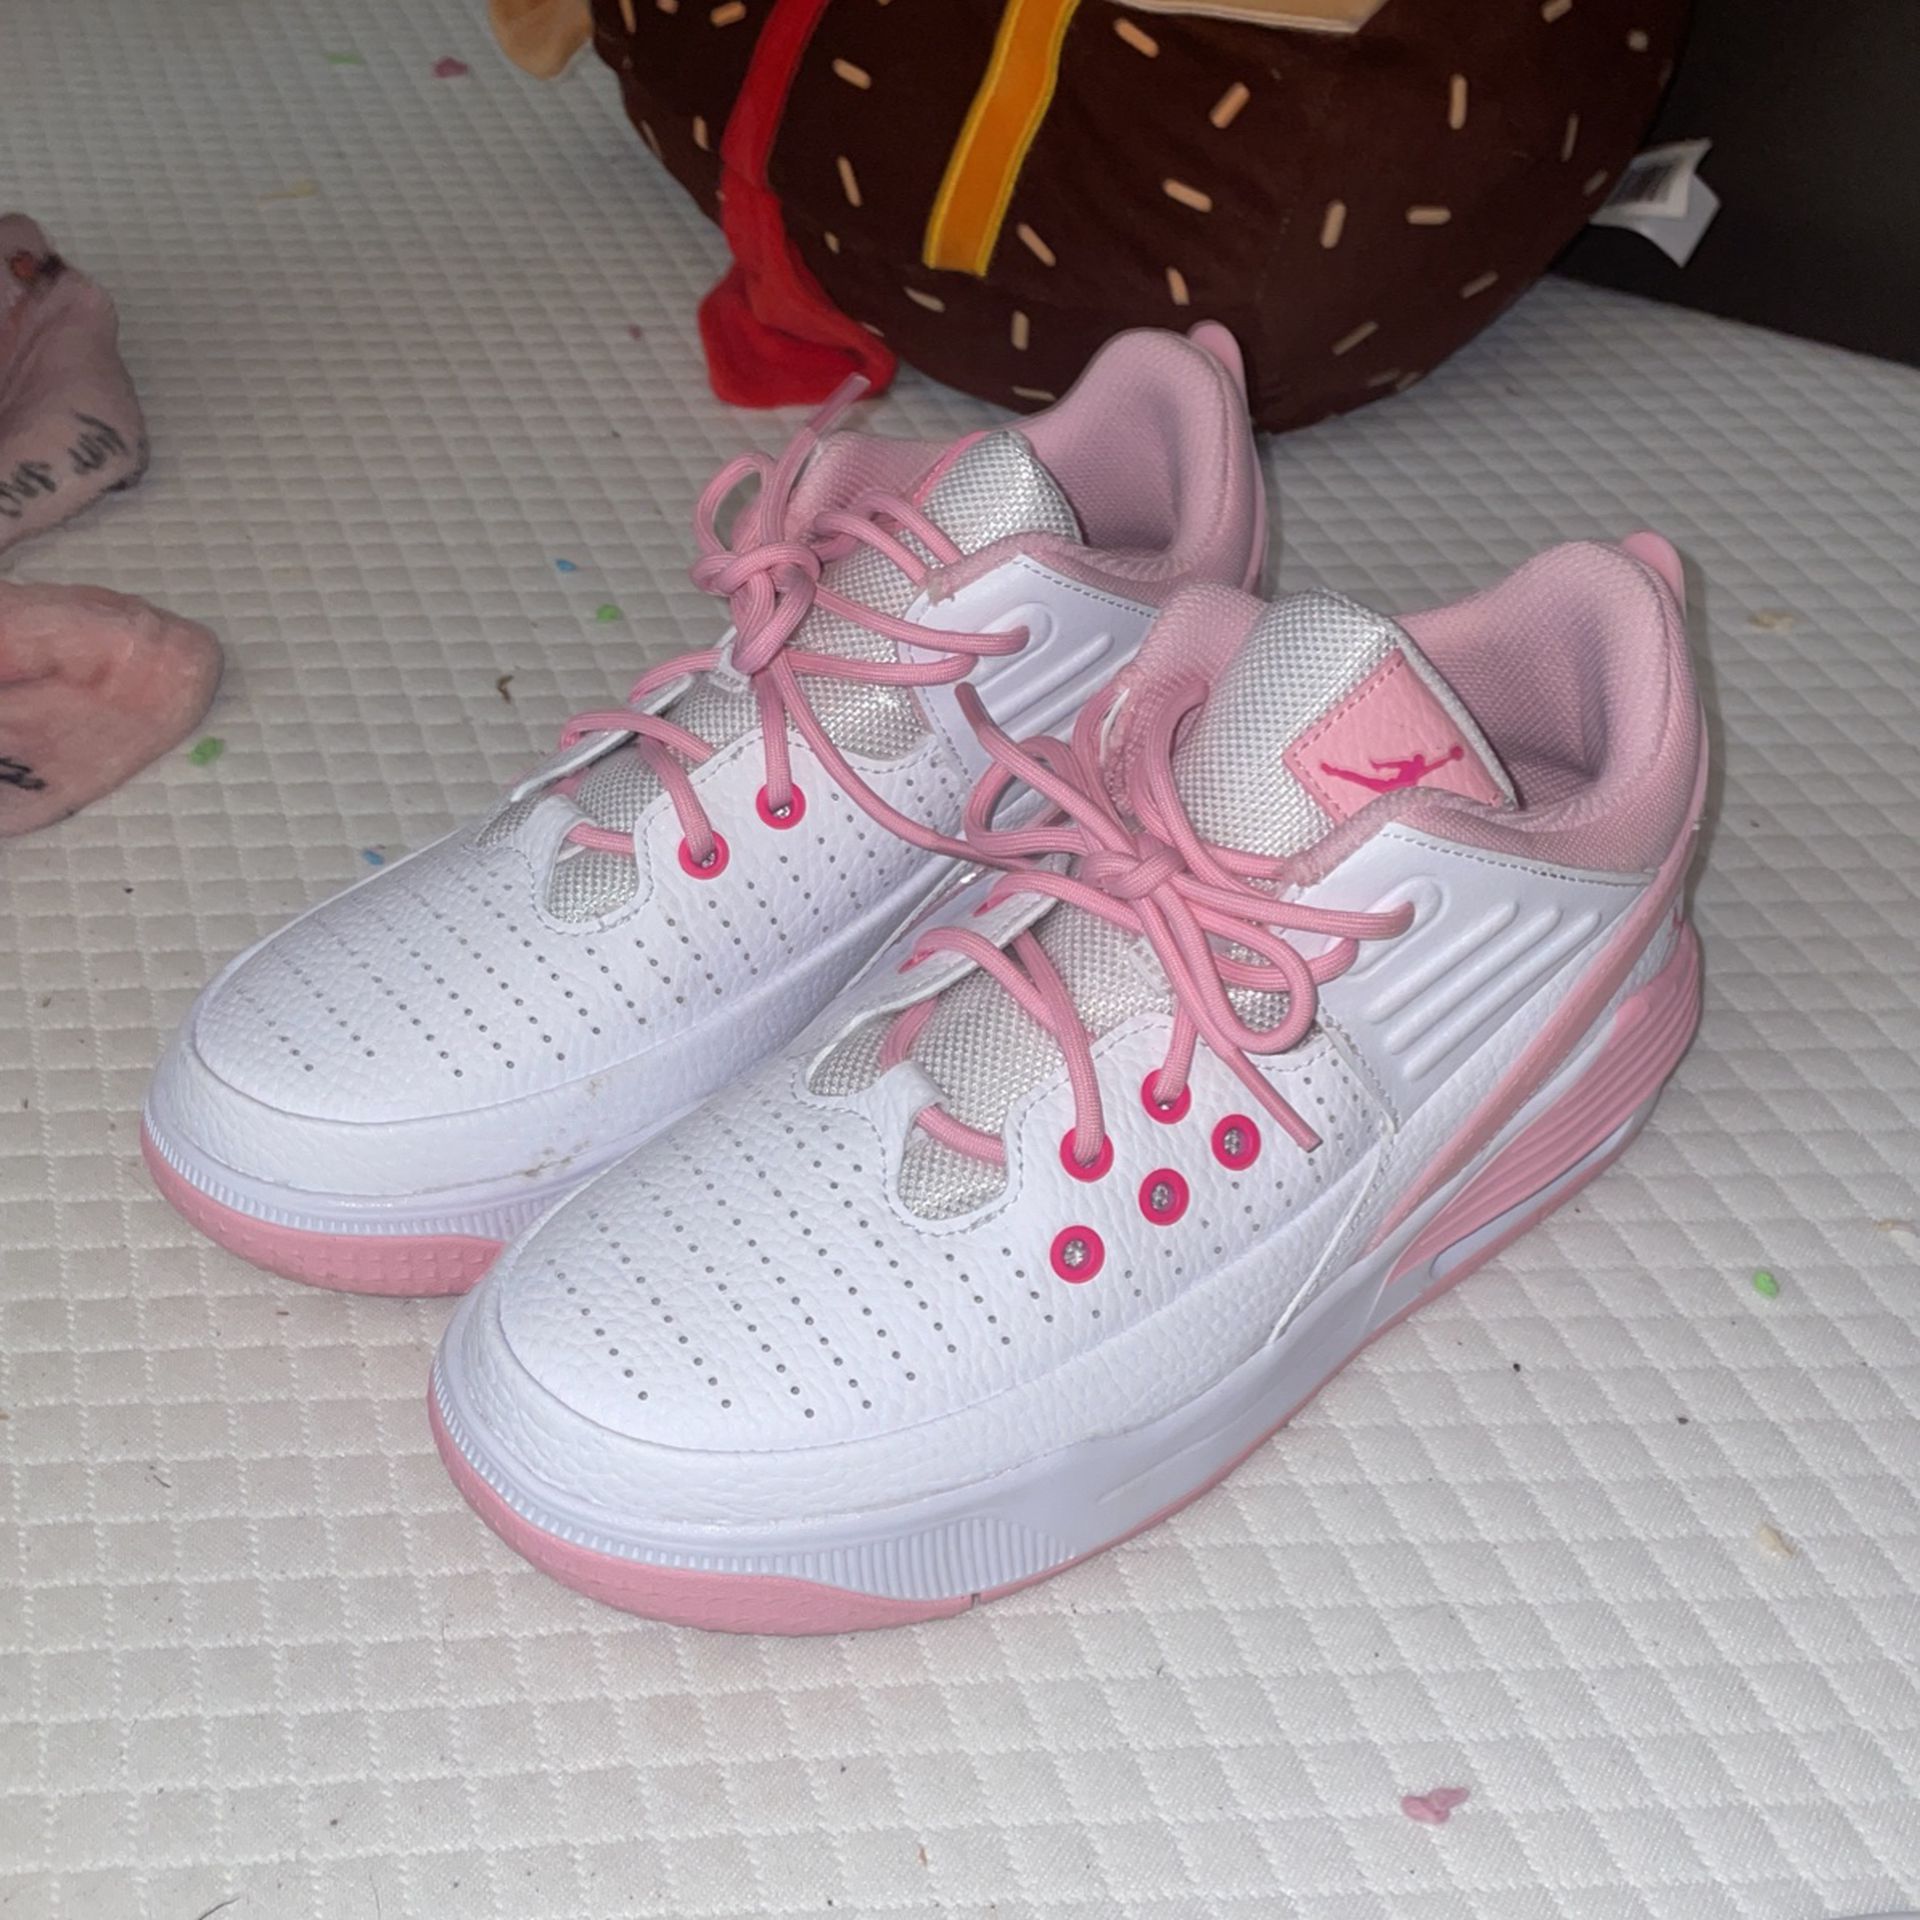 Size 6 Nike Air Jordan’s